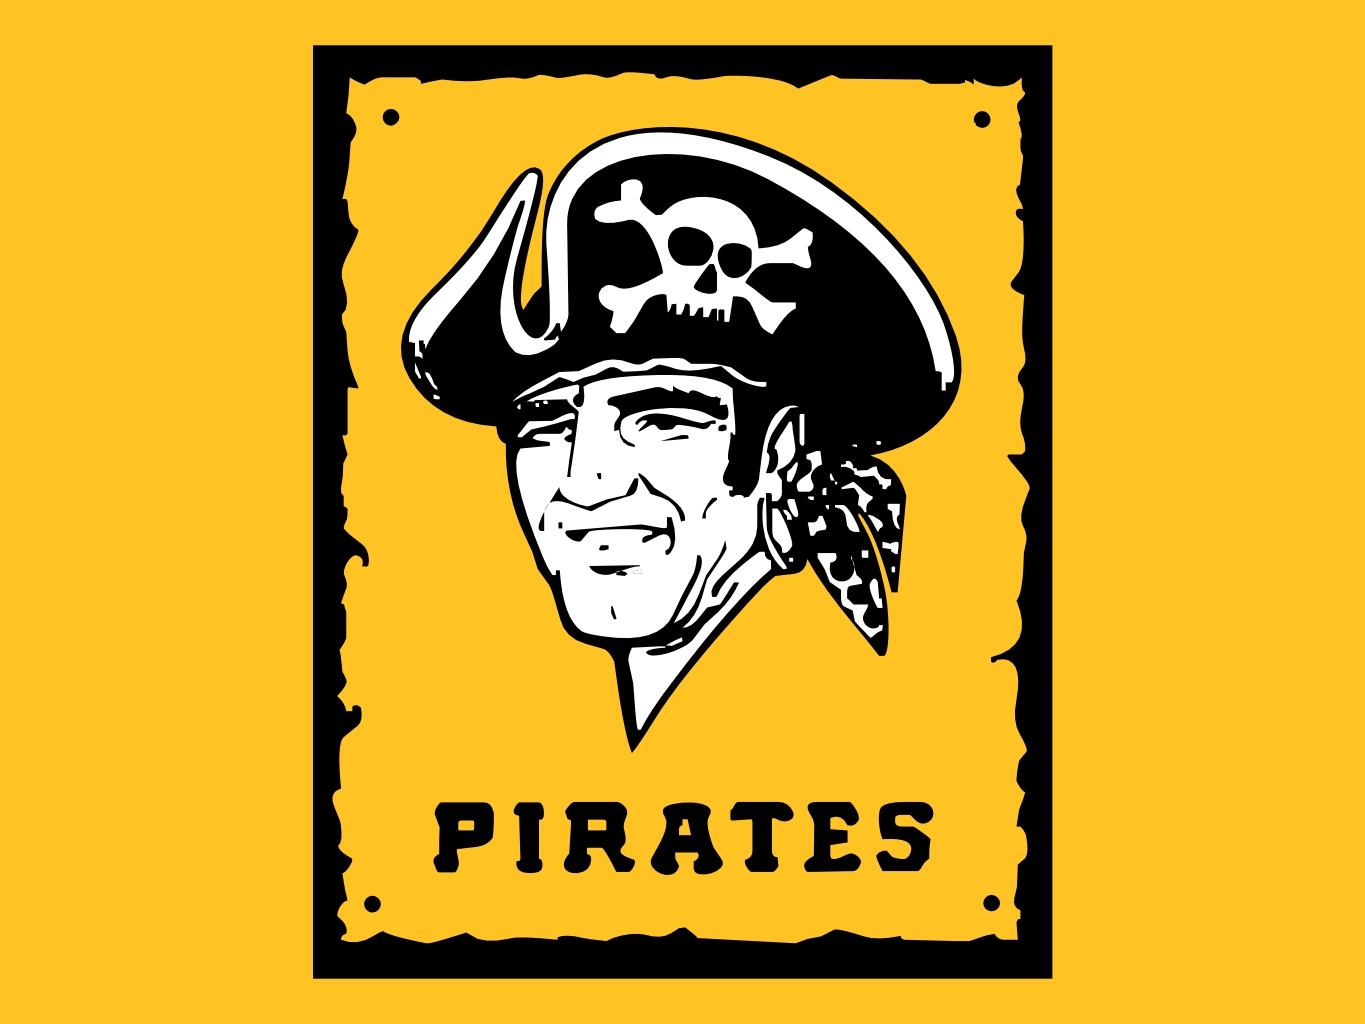 Pittsburgh Pirates Wallpaper Full Free HD Wallpapers